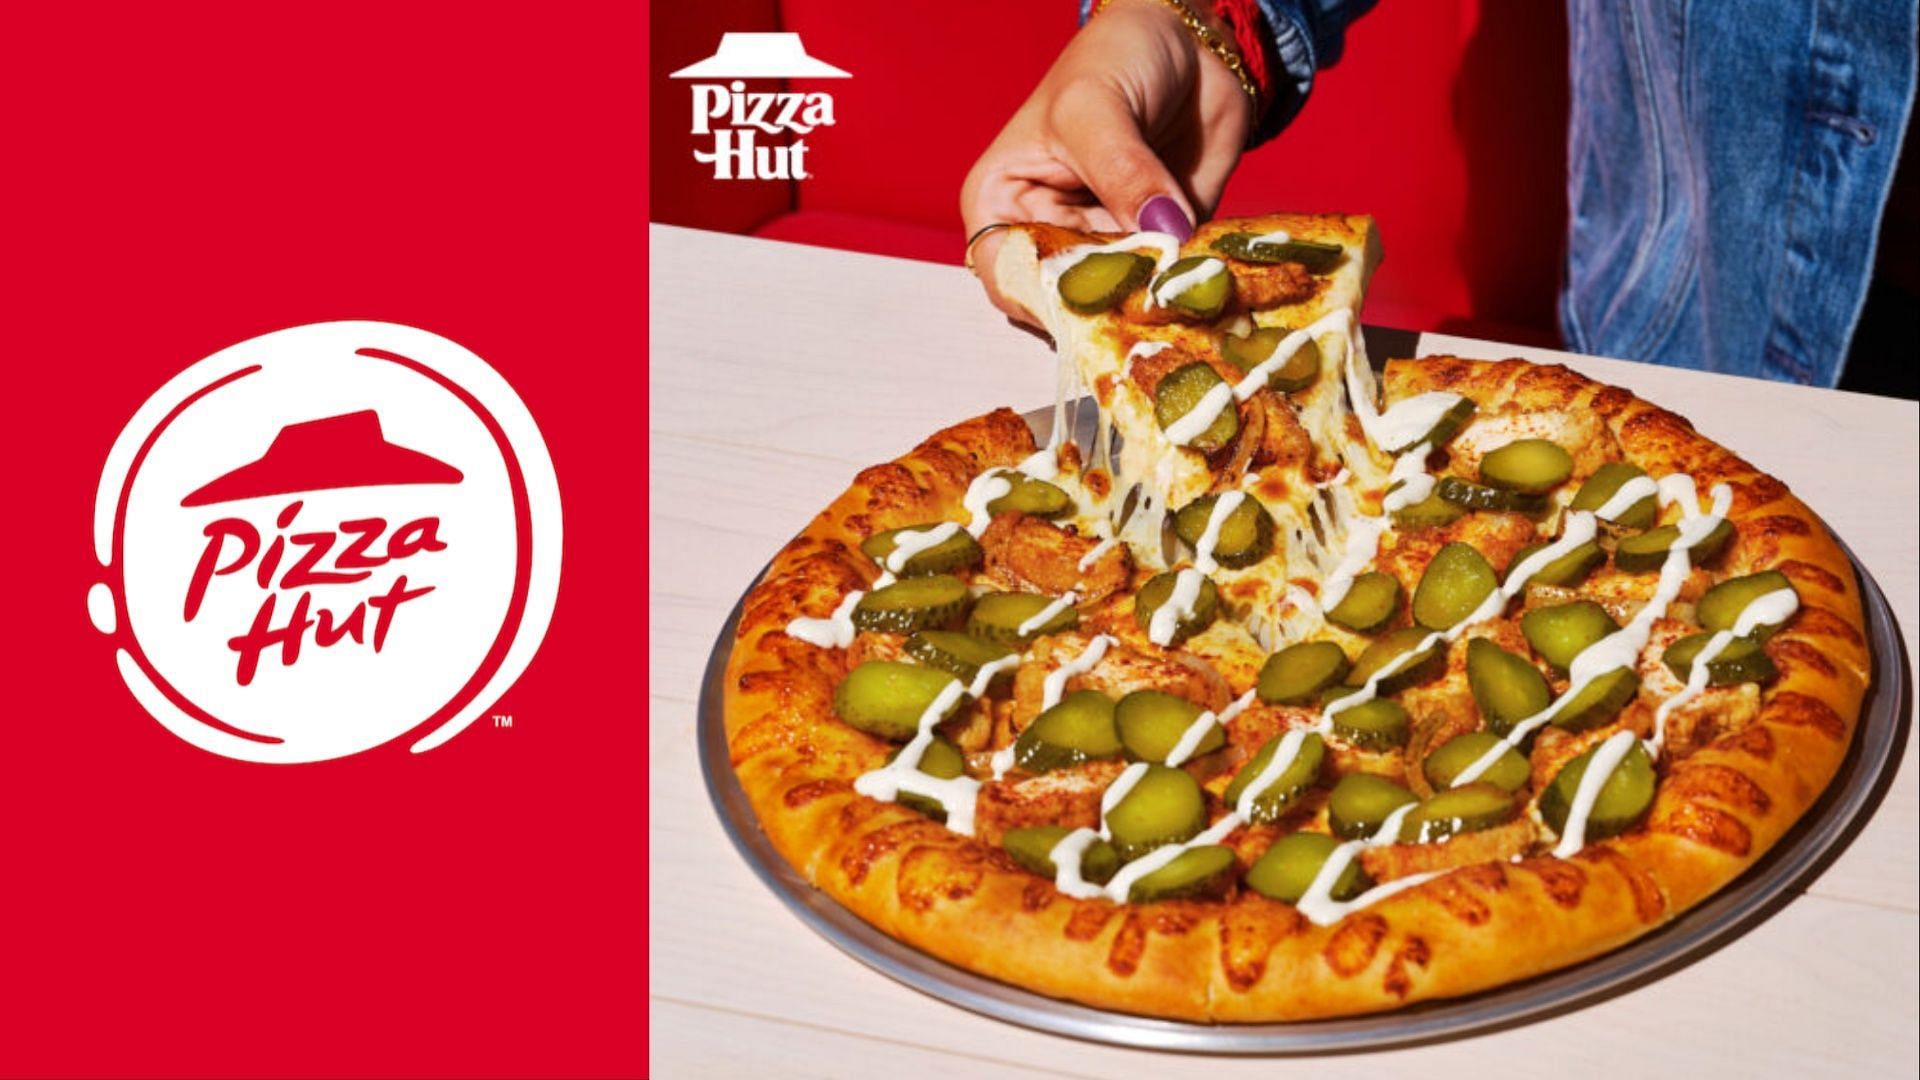 Pizza Hut introduces a new Pickle Pizza (Image via Pizza Hut)